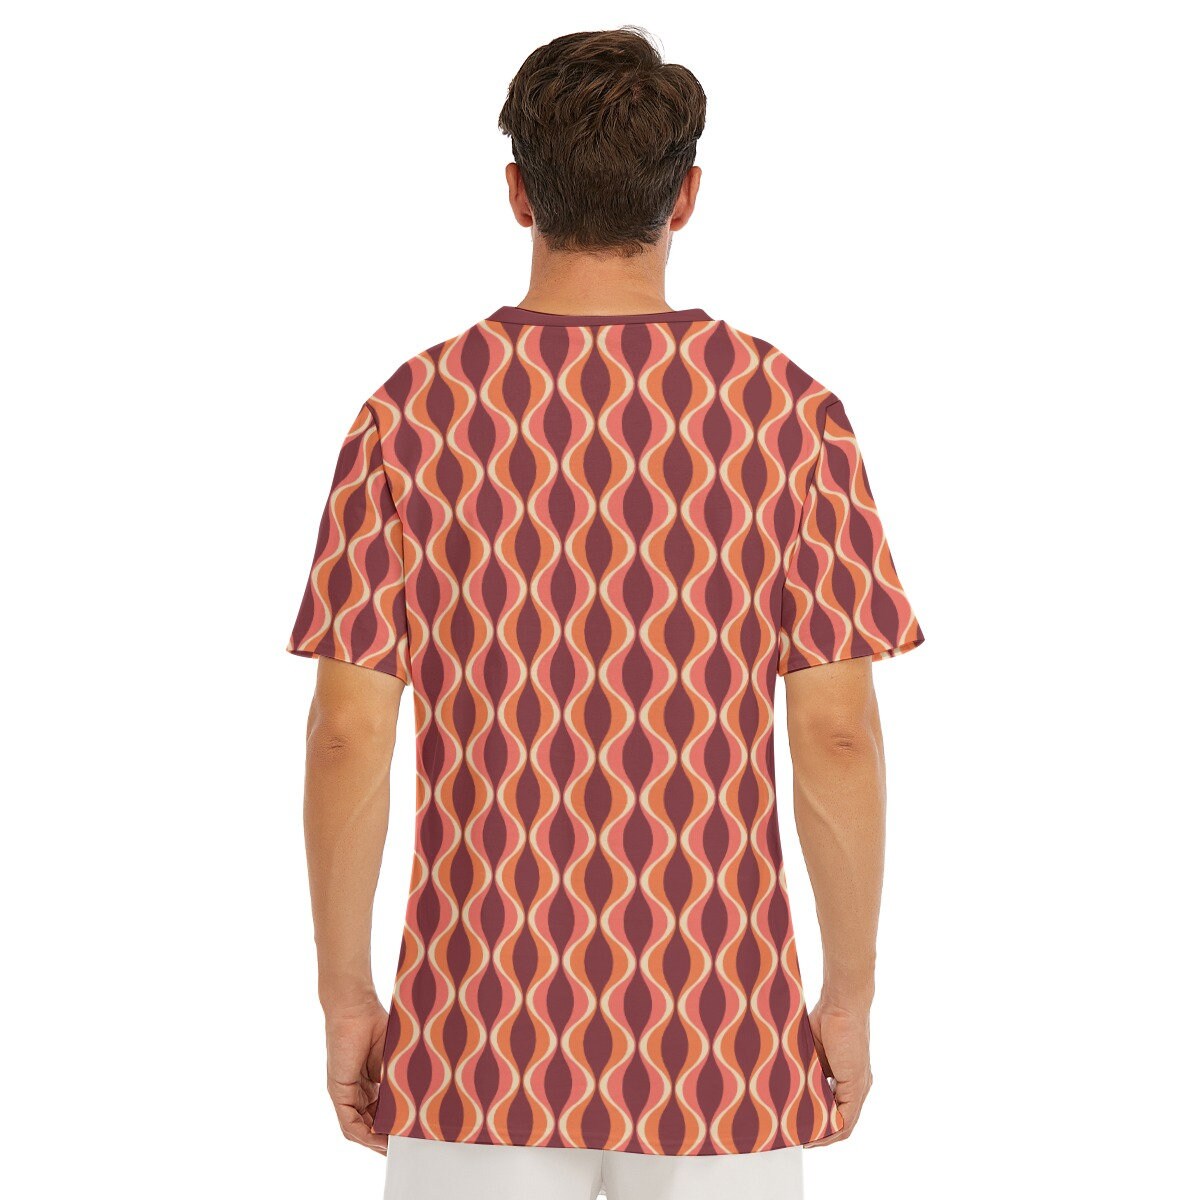 Retro T-Shirt Men, 100% Cotton T-shirt, 60s 70s Style Shirt, Vintage Style T-Shirt, Maroon Geometric T-shirt